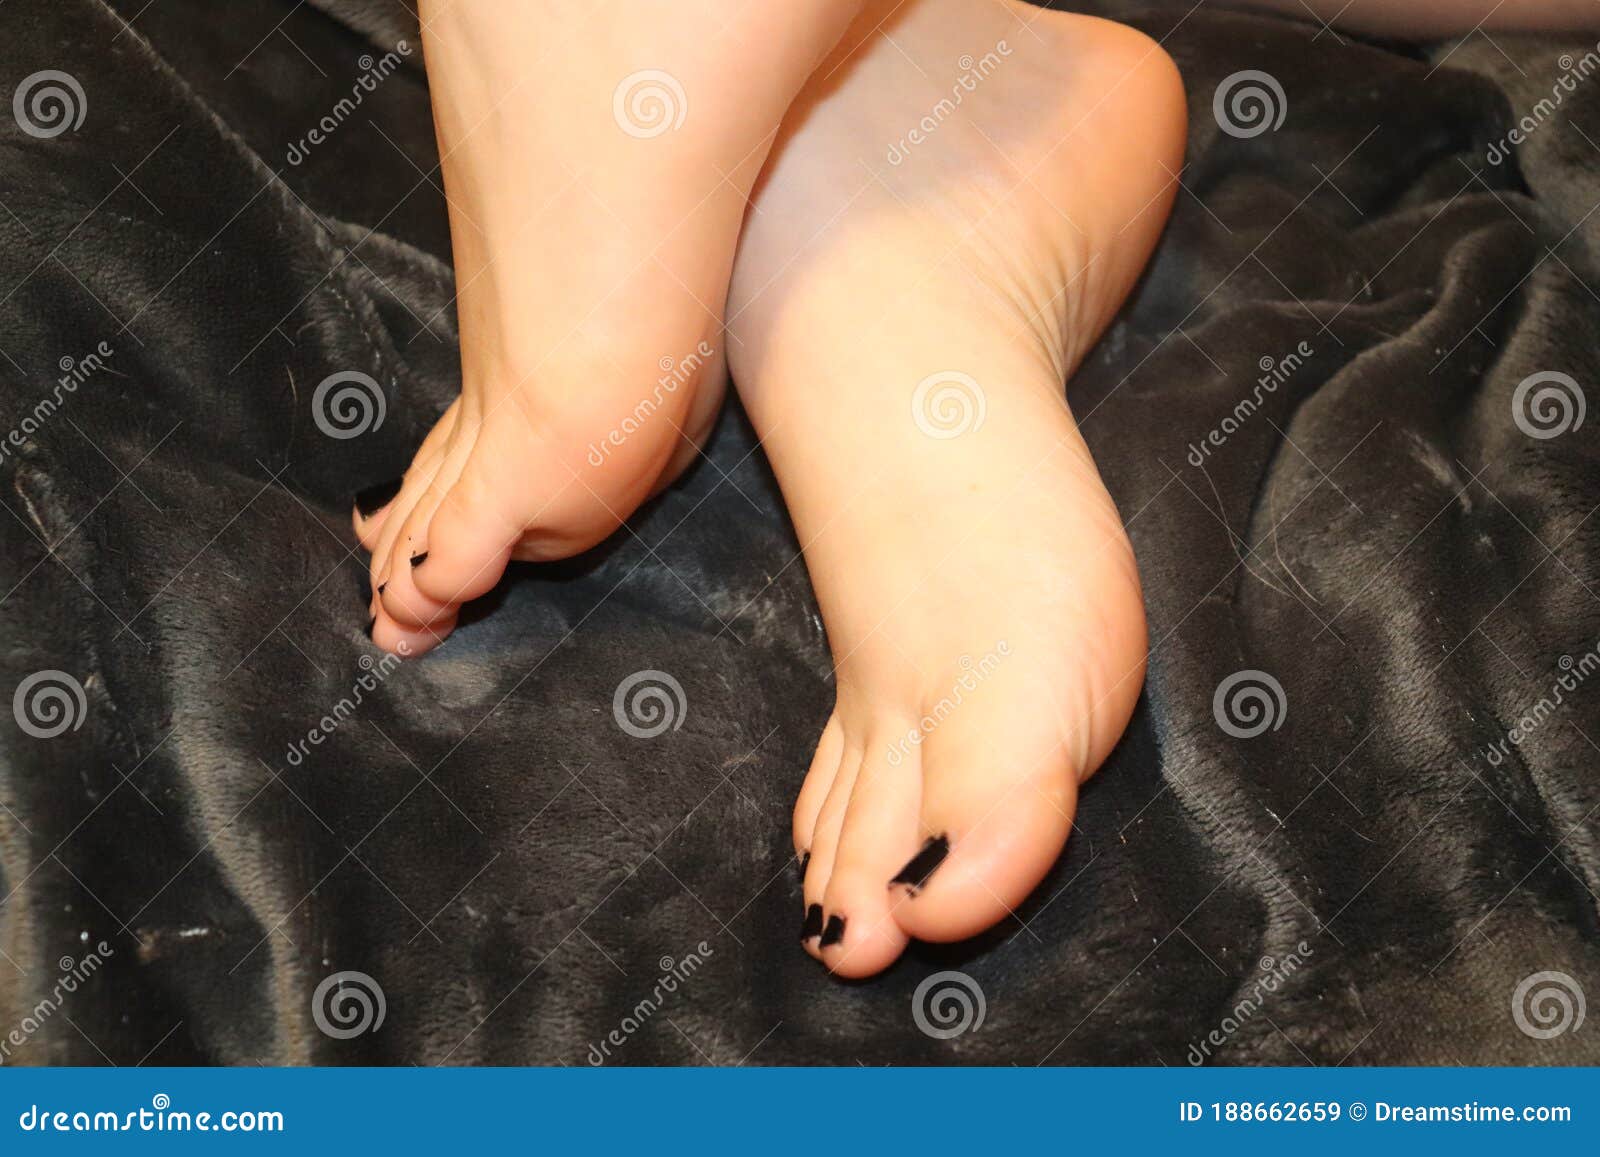 Feet Amateur Nicole Scherzinger Nude Images